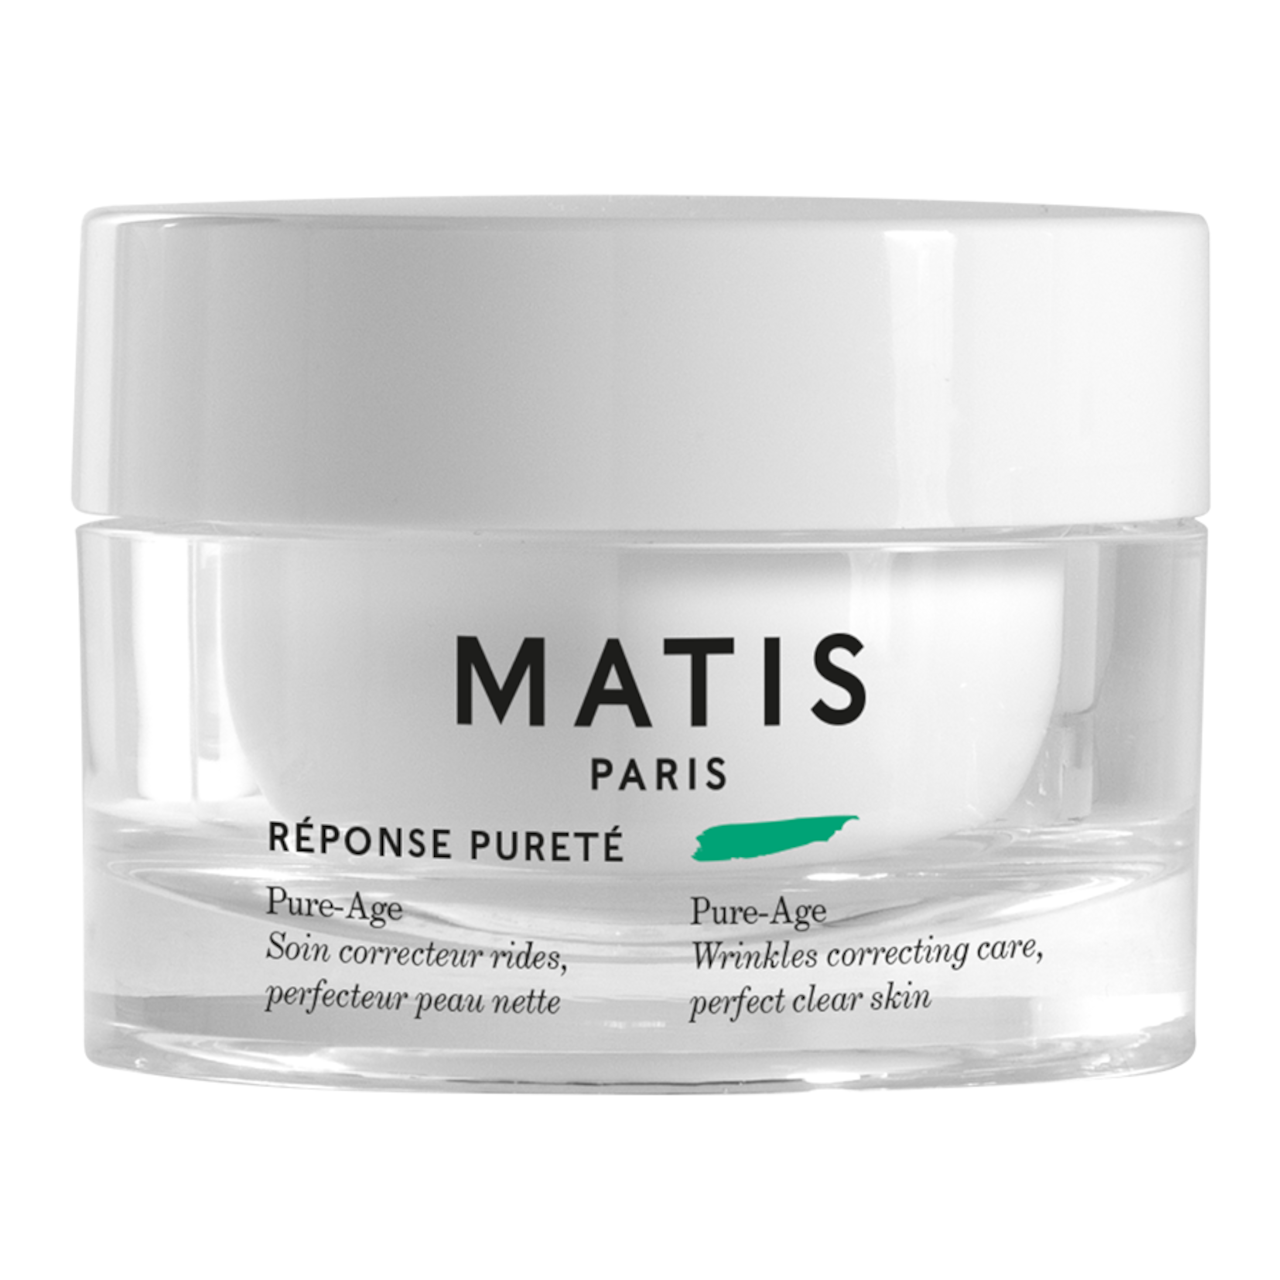 Matis Paris Reponse Purete Pure-Age Cream - 50 ml (A0610011) Questions & Answers